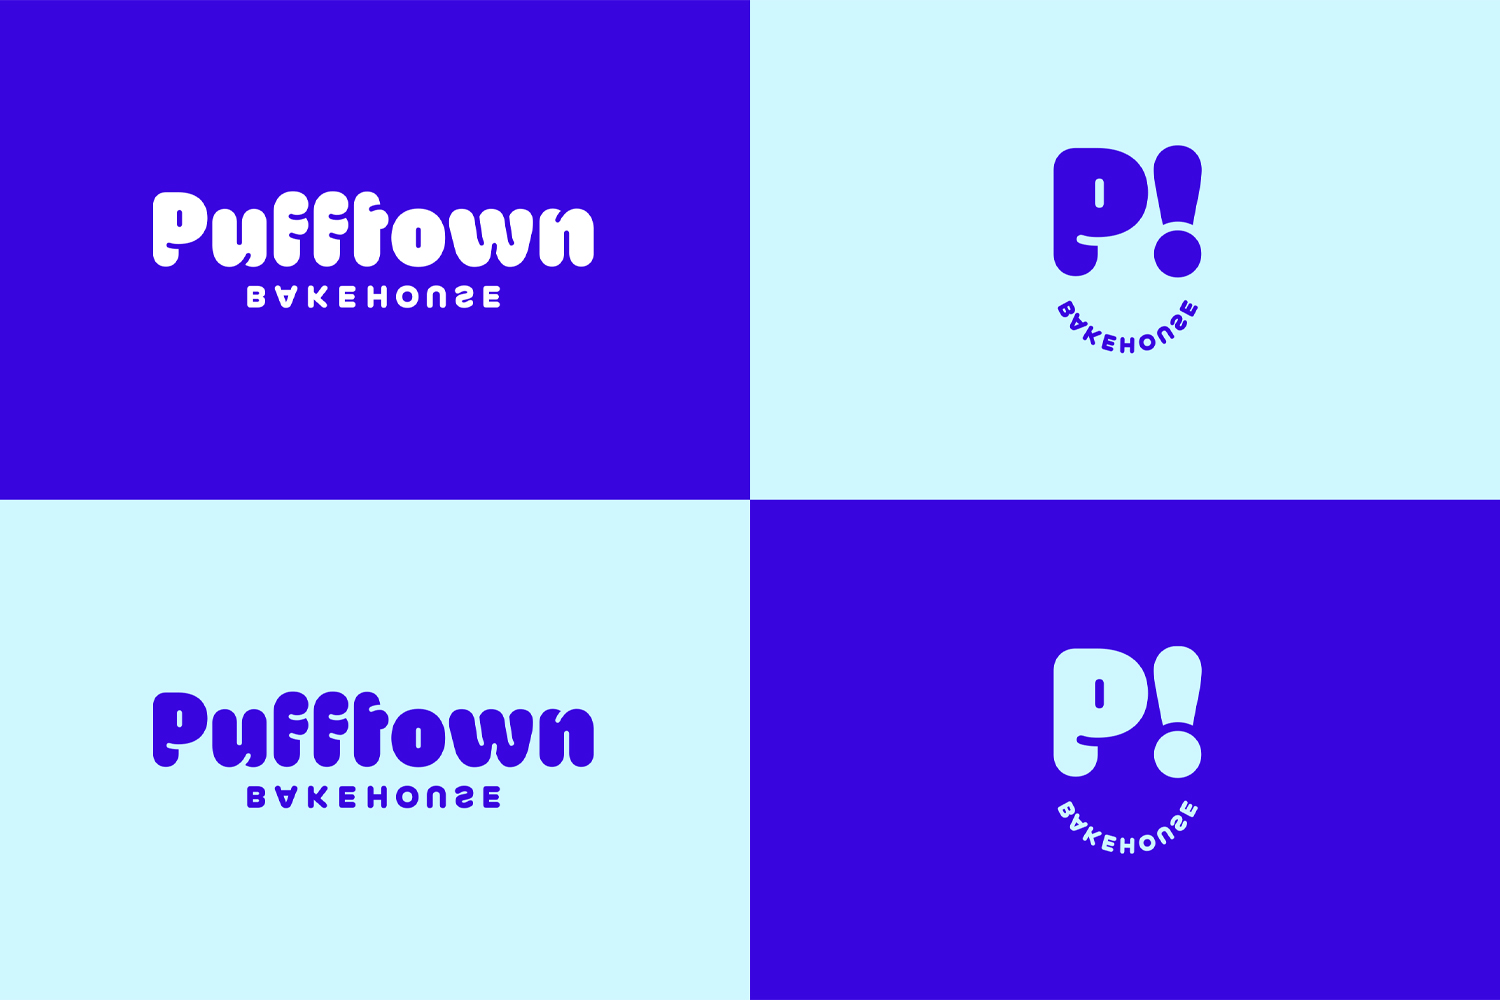 Pufftown面包房品牌视觉设计